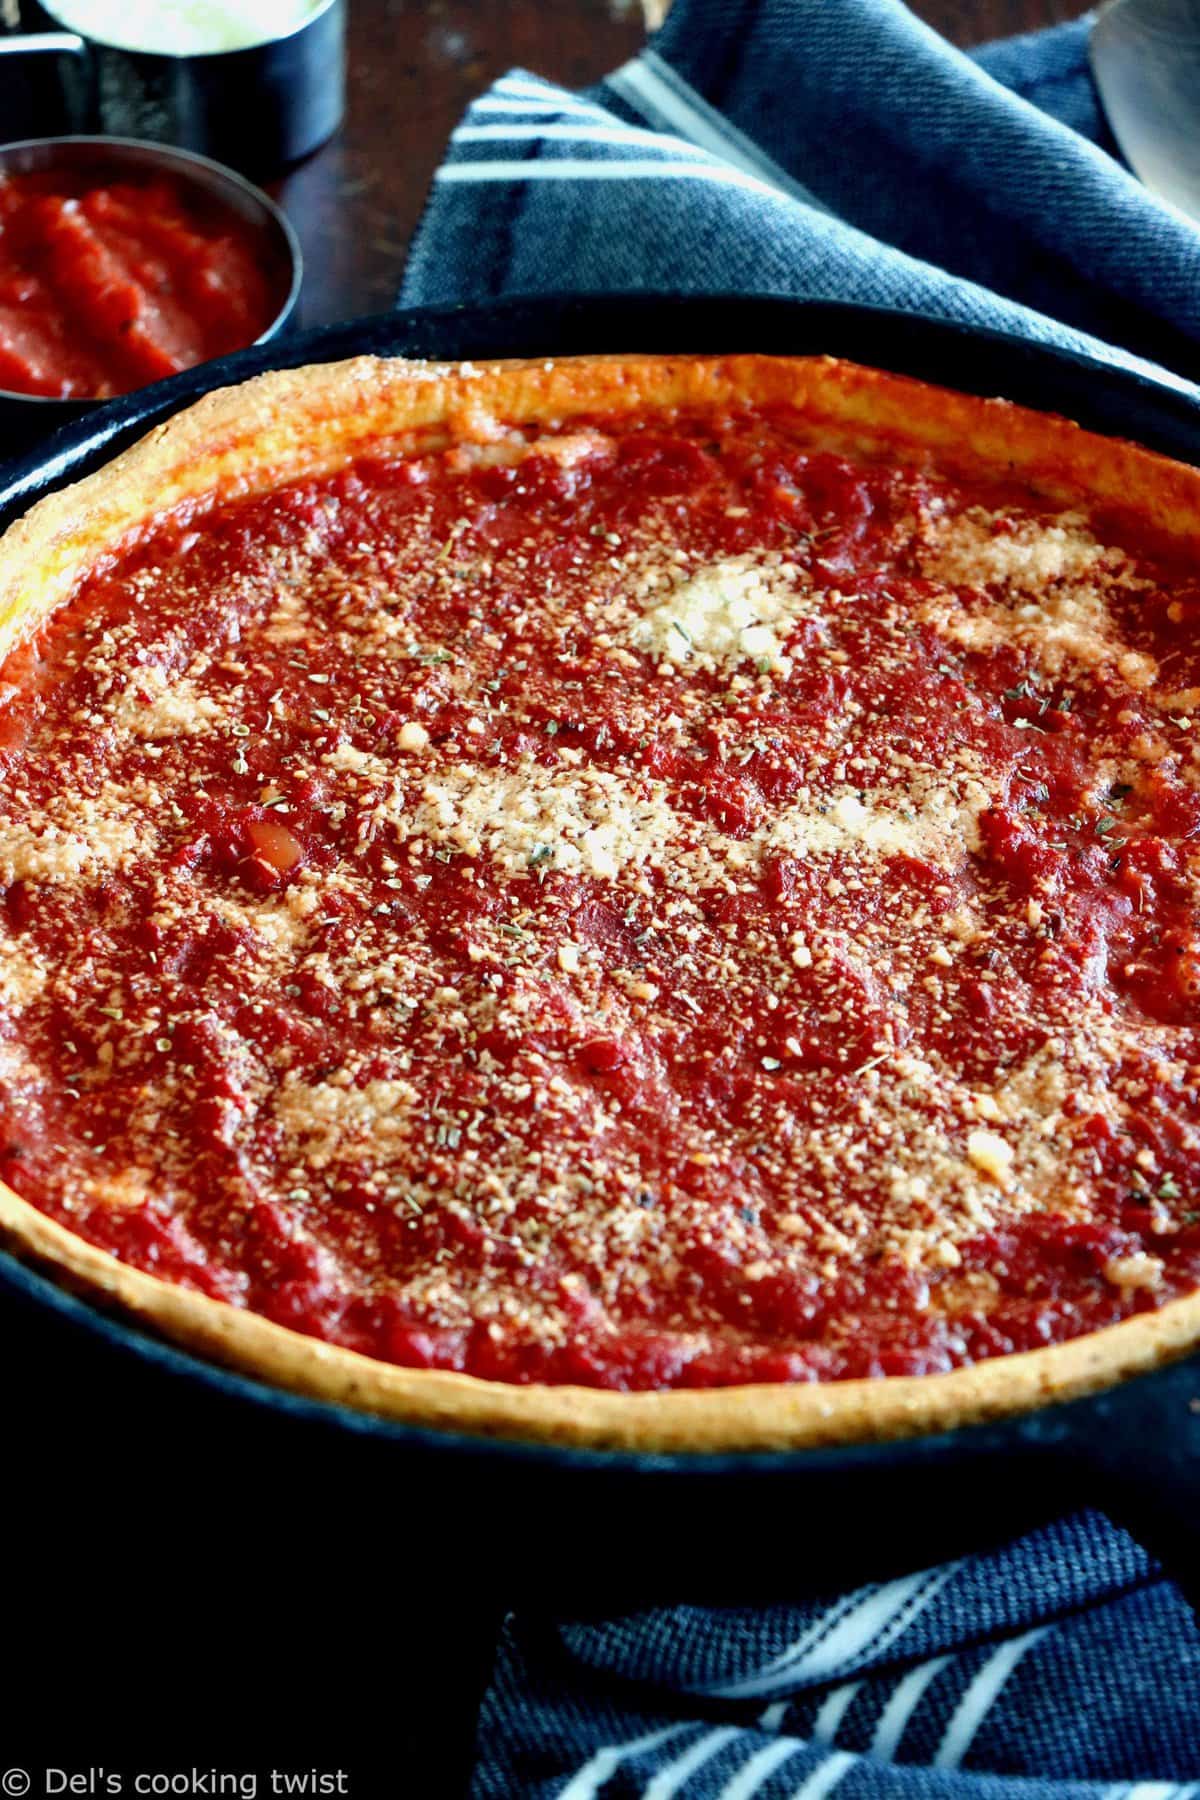 https://www.delscookingtwist.com/wp-content/uploads/2017/08/Chicago-Style-Deep-Dish-Pizza_3000b.jpg